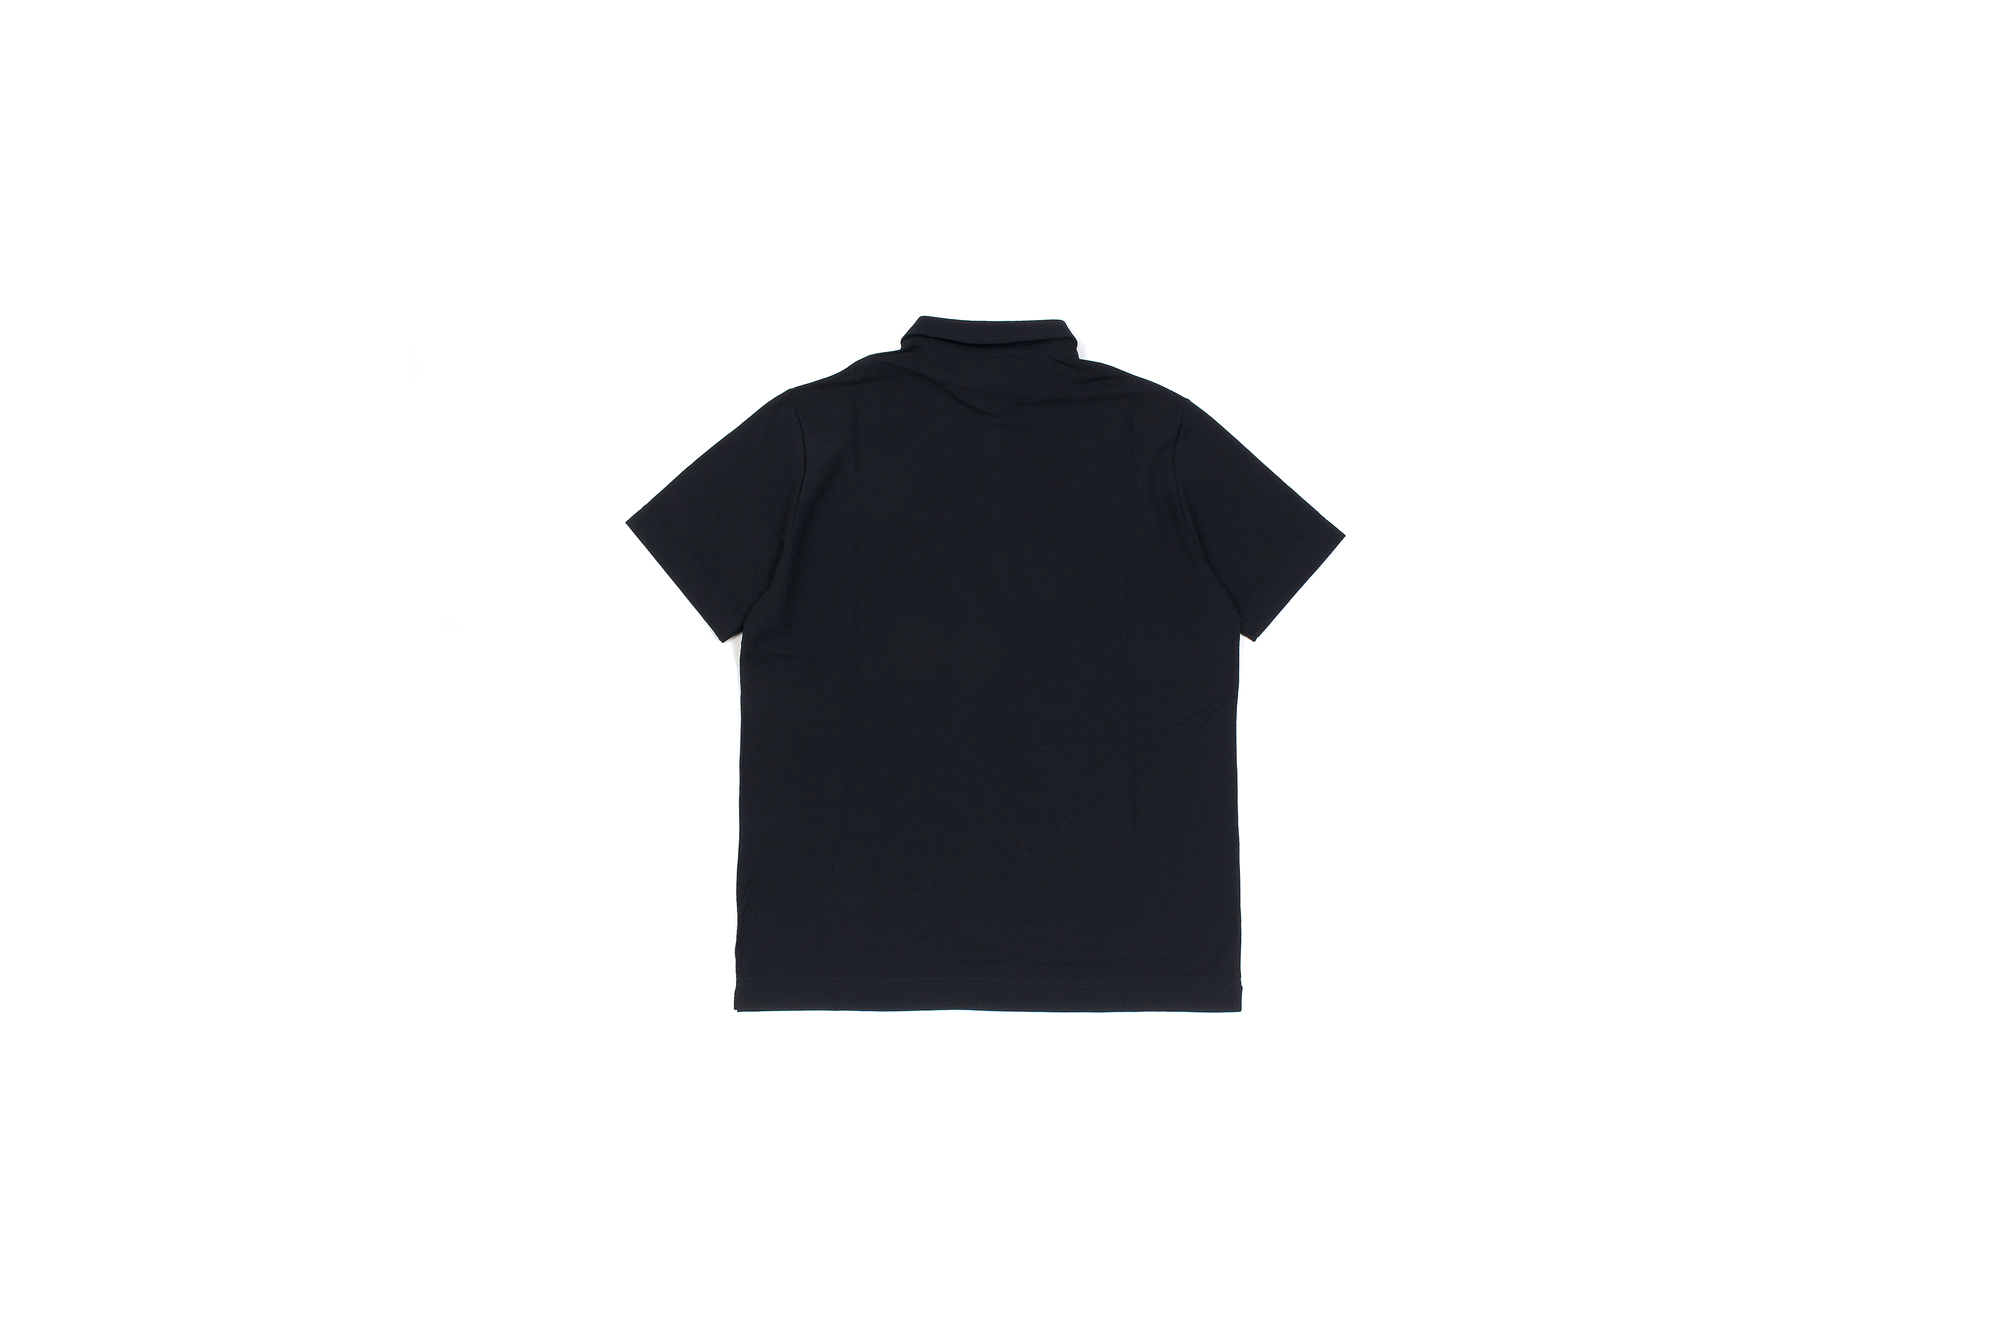 ZANONE(ザノーネ) Polo Shirt ice cotton アイスコットン ポロシャツ NAVY (ネイビー・Z0542) made in italy (イタリア製) 2020春夏新作 愛知 名古屋 altoediritto アルトエデリット